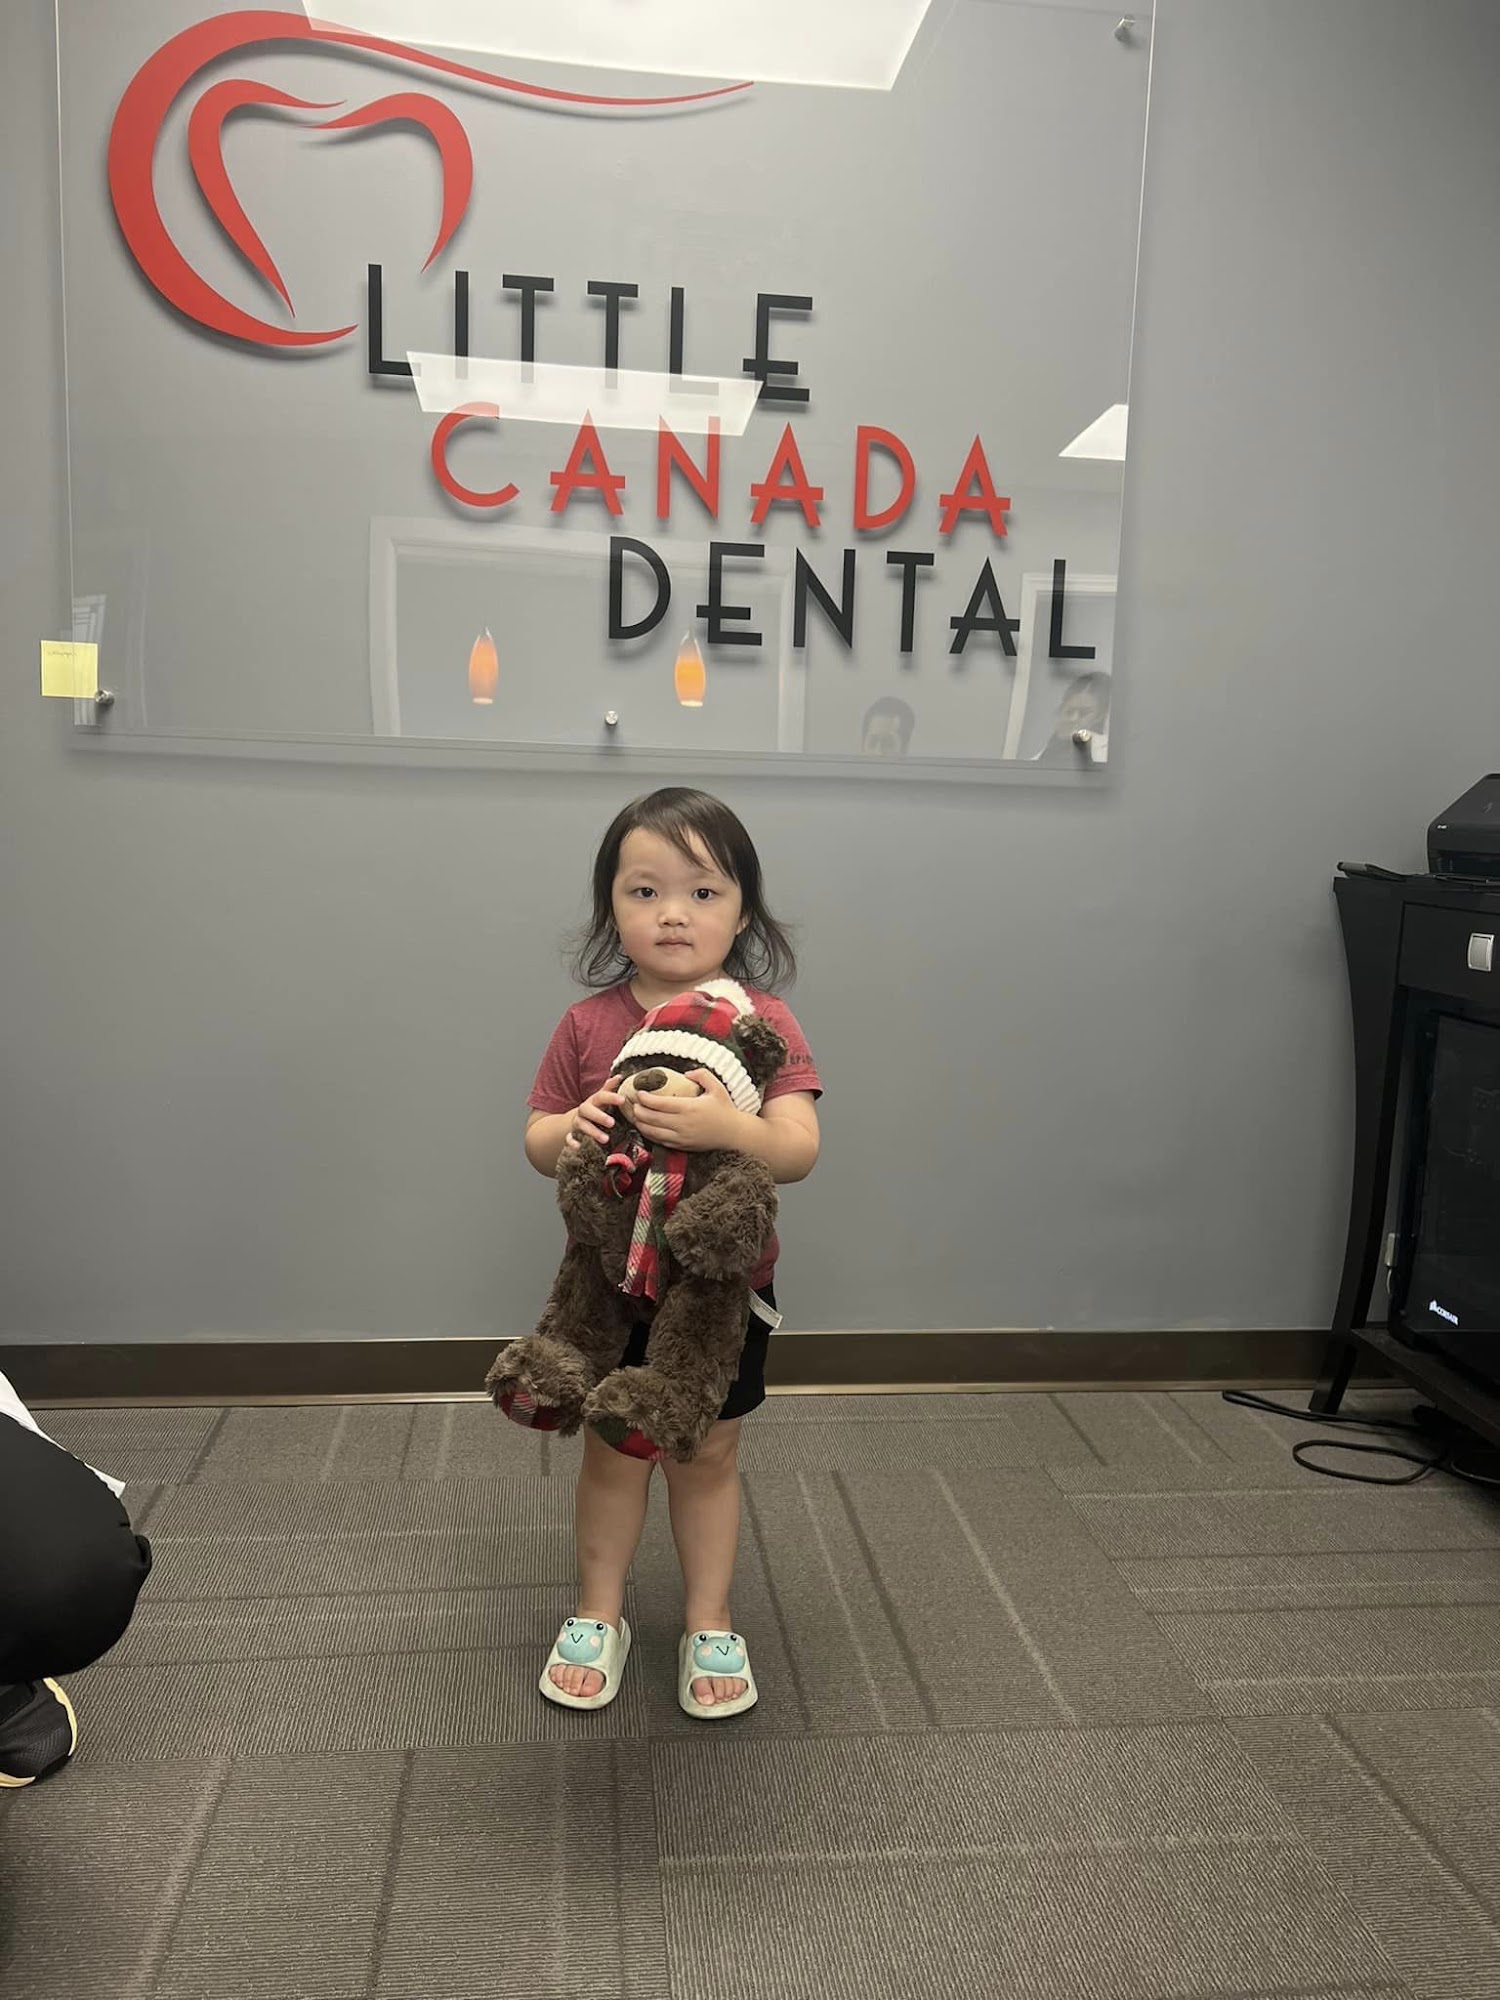 Little Canada Dental 188 Little Canada Rd E, Little Canada Minnesota 55117